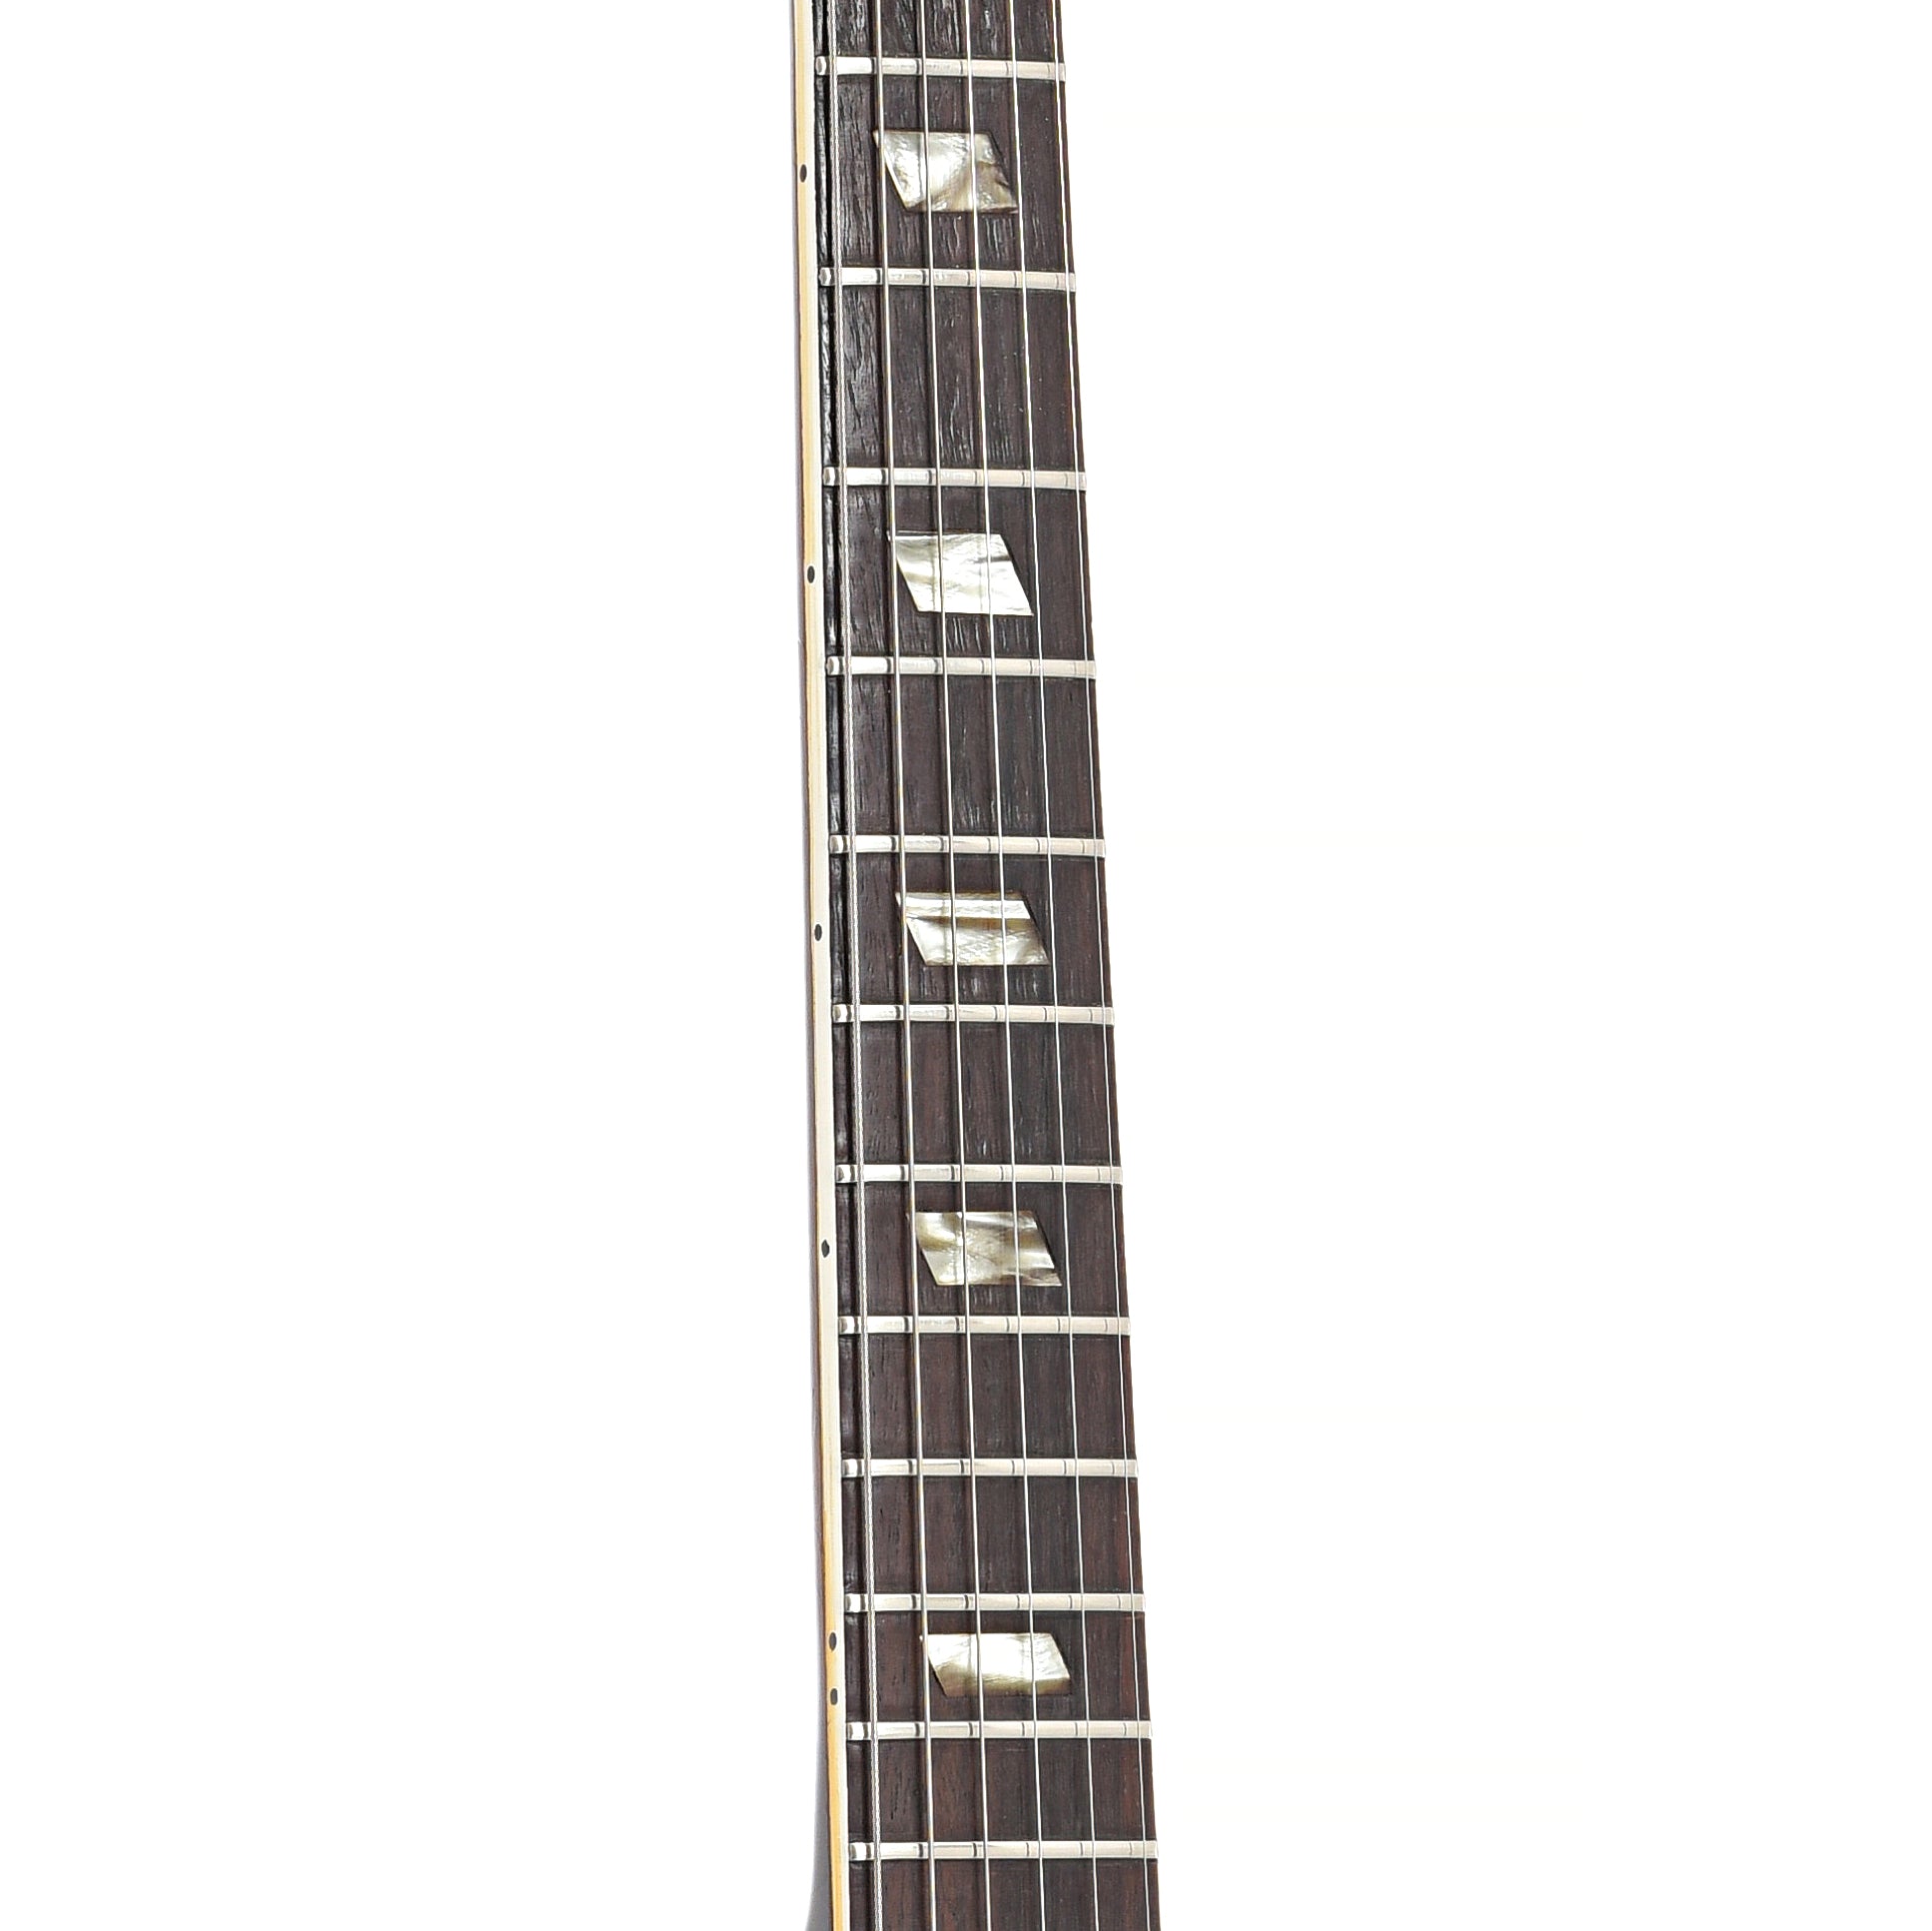 Fretboard of Epiphone E230TD Casino Hollow Body Electric Guitar (c.1966-69)